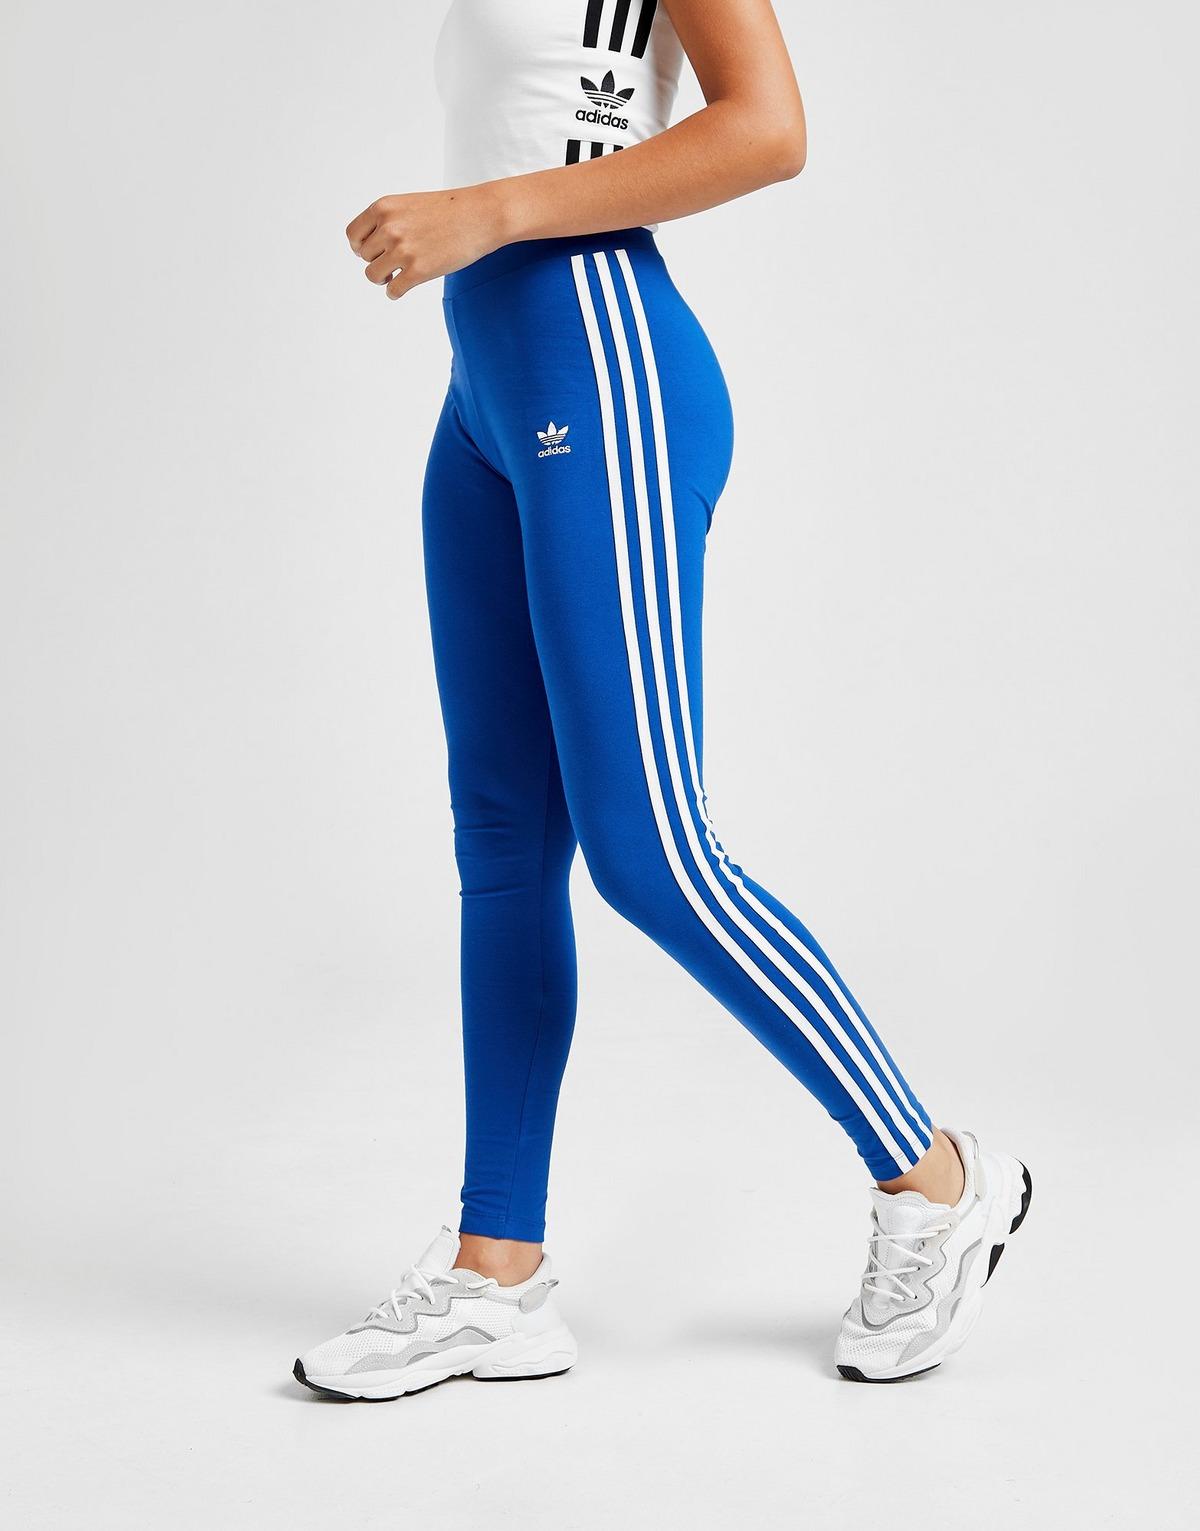 qqqwjf.adidas 3 stripe leggings blue , Off 63%,shorin-ryu.net